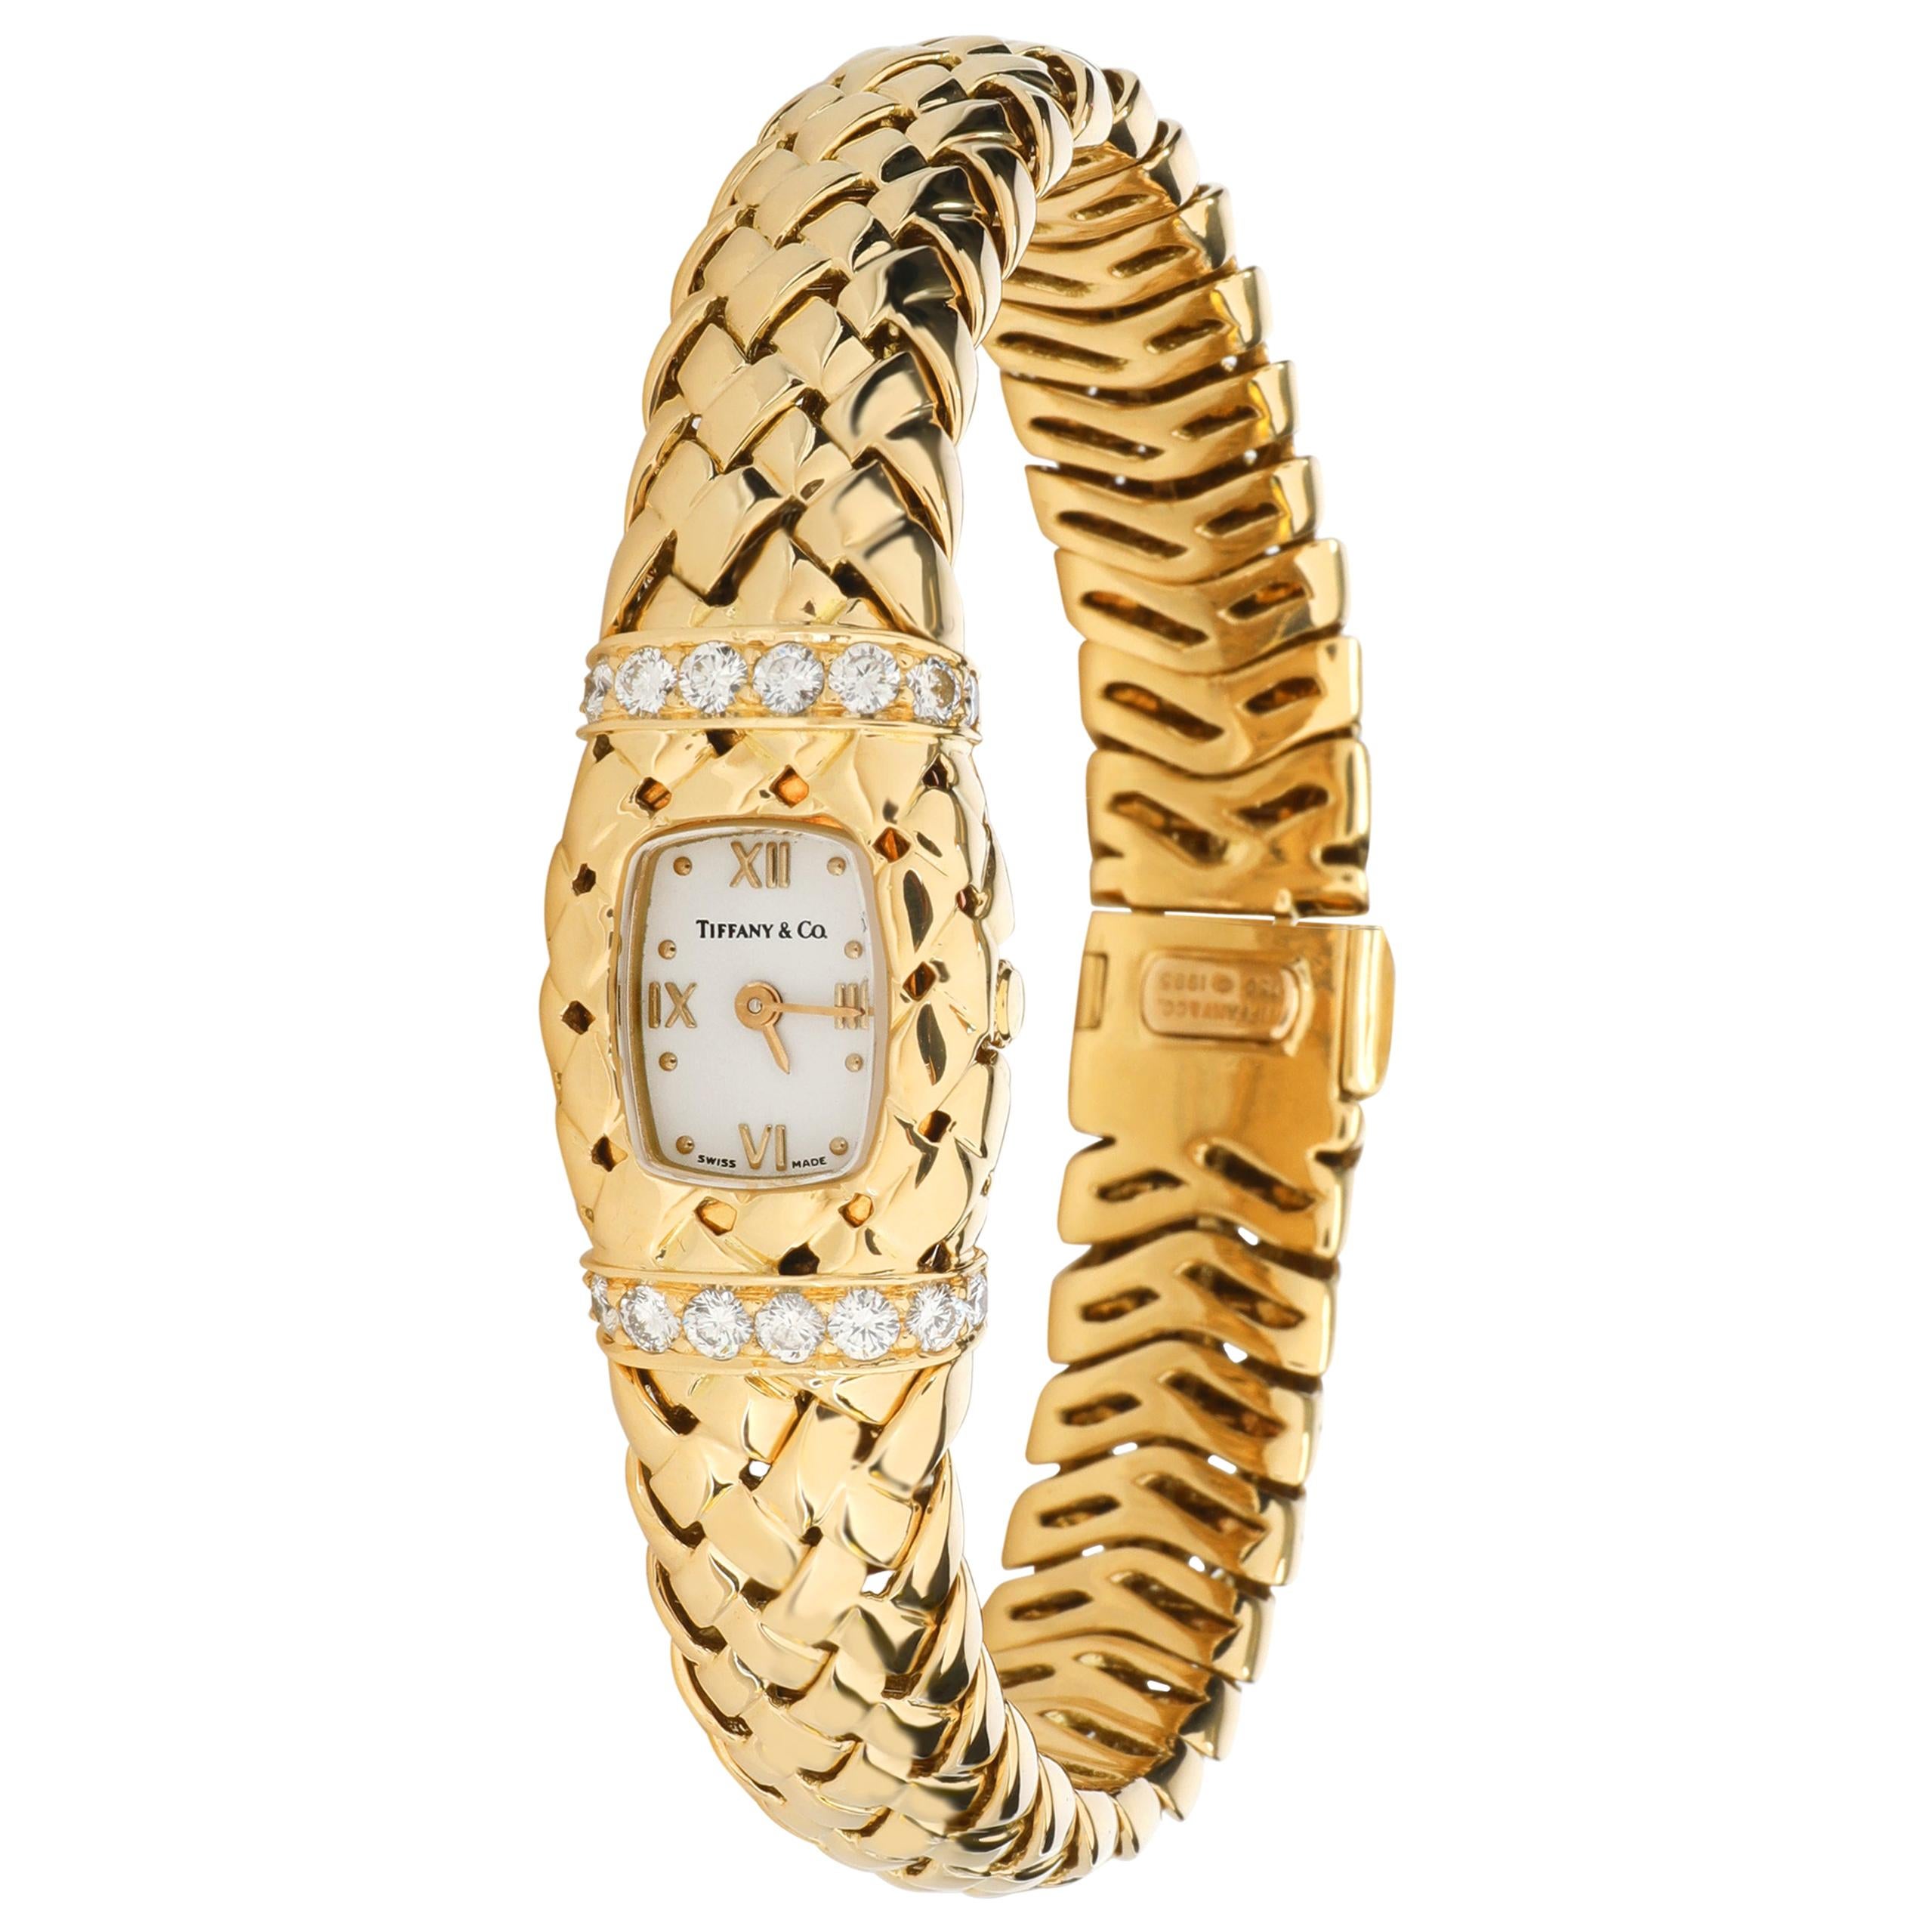 Tiffany & Co. Vannerie Vannerie Women's Watch in 18 Karat Yellow Gold